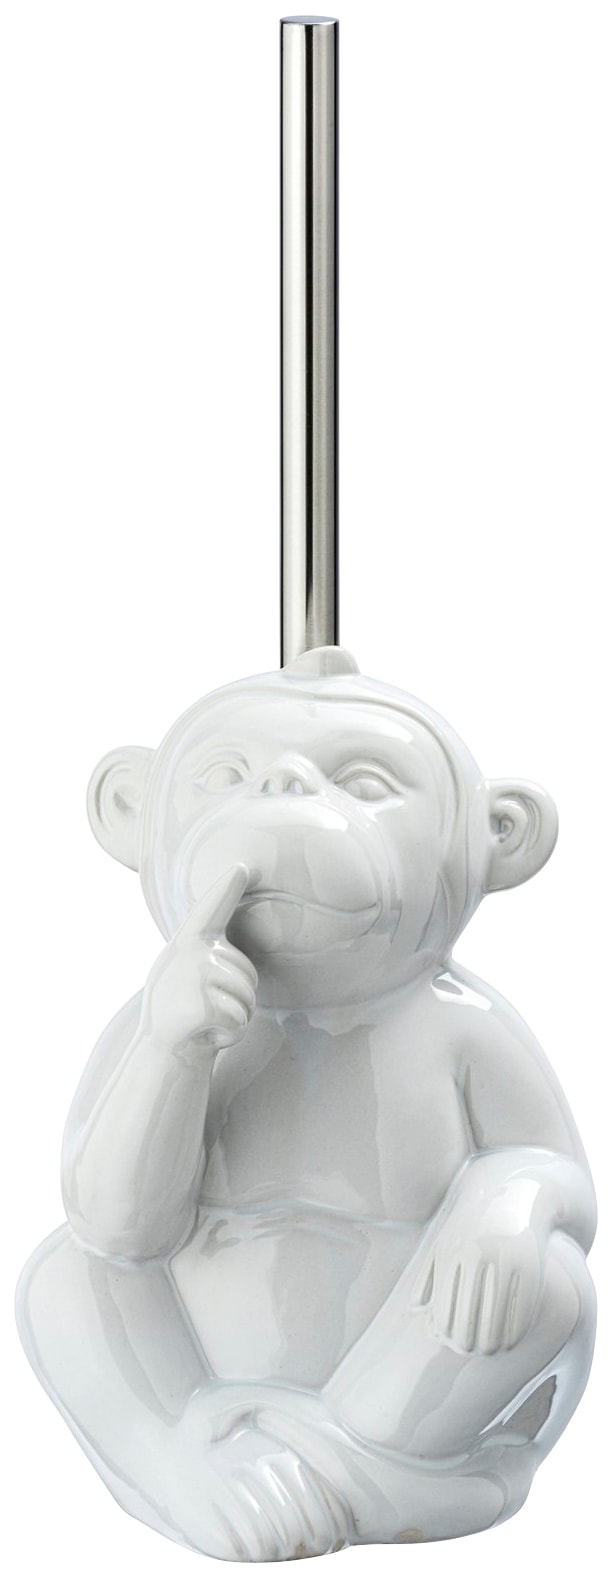 WENKO WC-Garnitur »Monkey«, 1 St., aus Keramik, Keramik